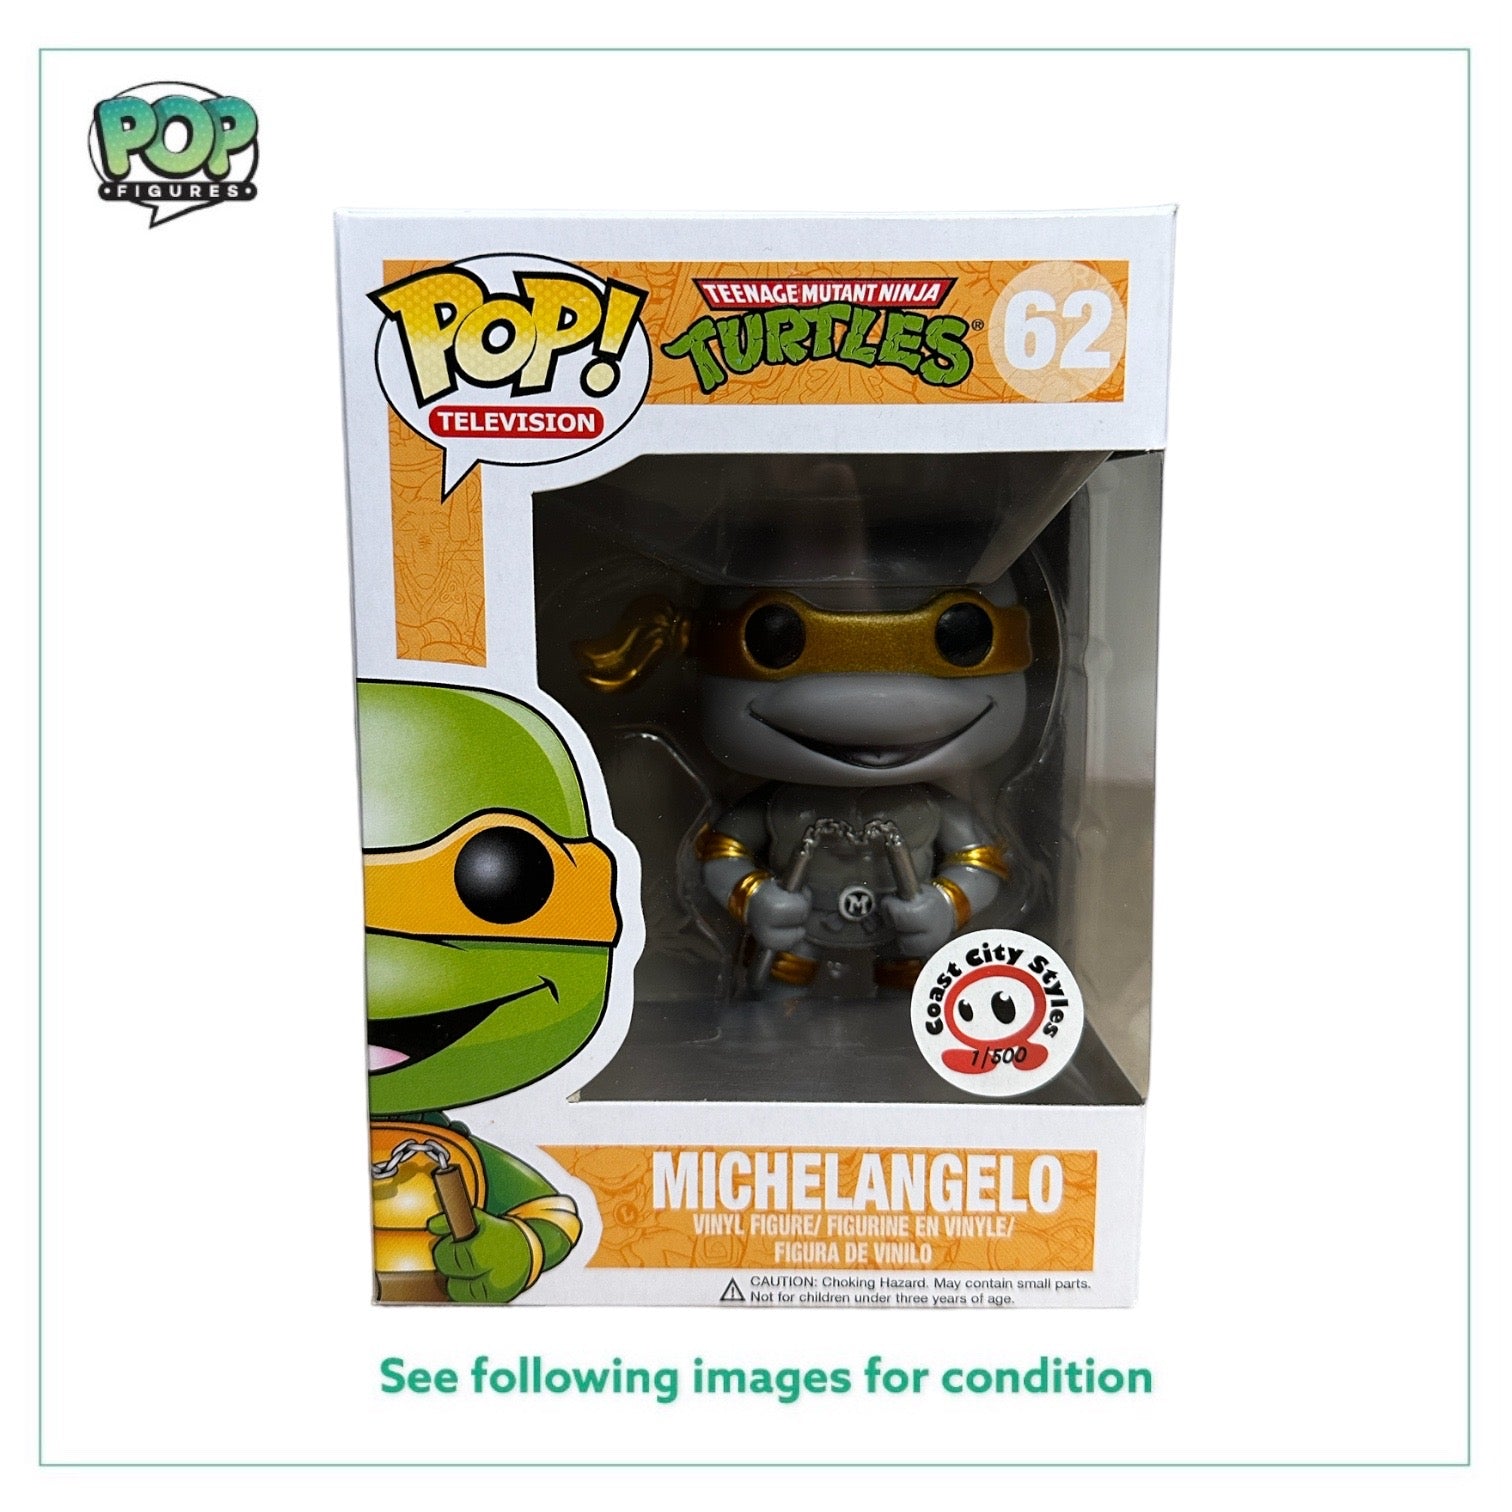 Michelangelo #62 (Grayscale Metallic) Funko Pop! - Teenage Mutant Ninja  Turtles - Coast City Styles Exclusive LE500 Pcs - Condition 8.75/10